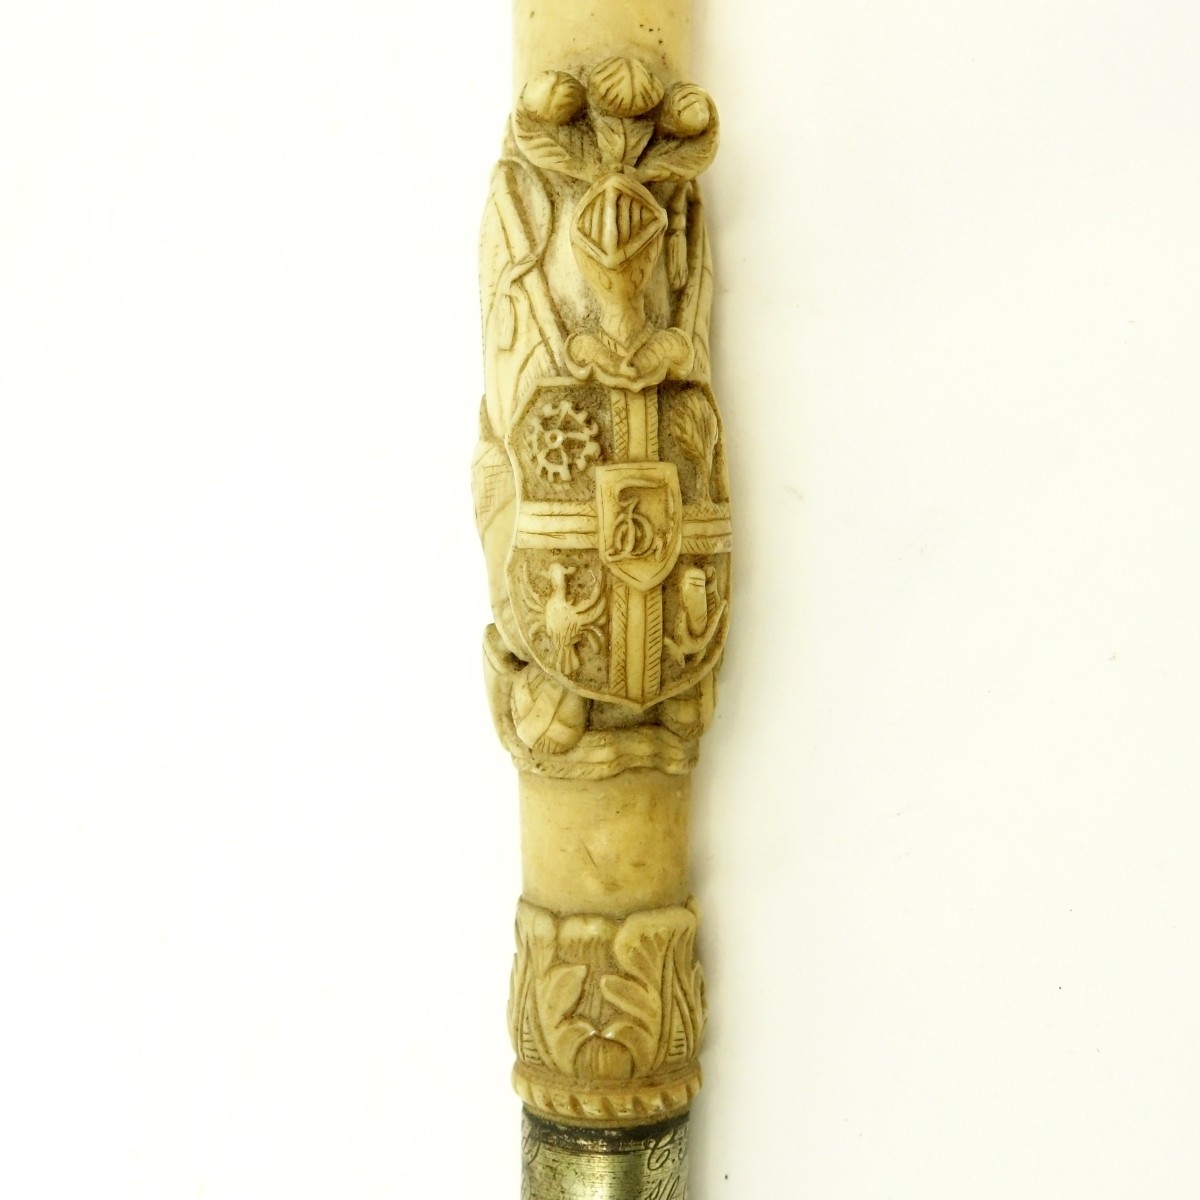 Antique Ivory Handled Walking Stick